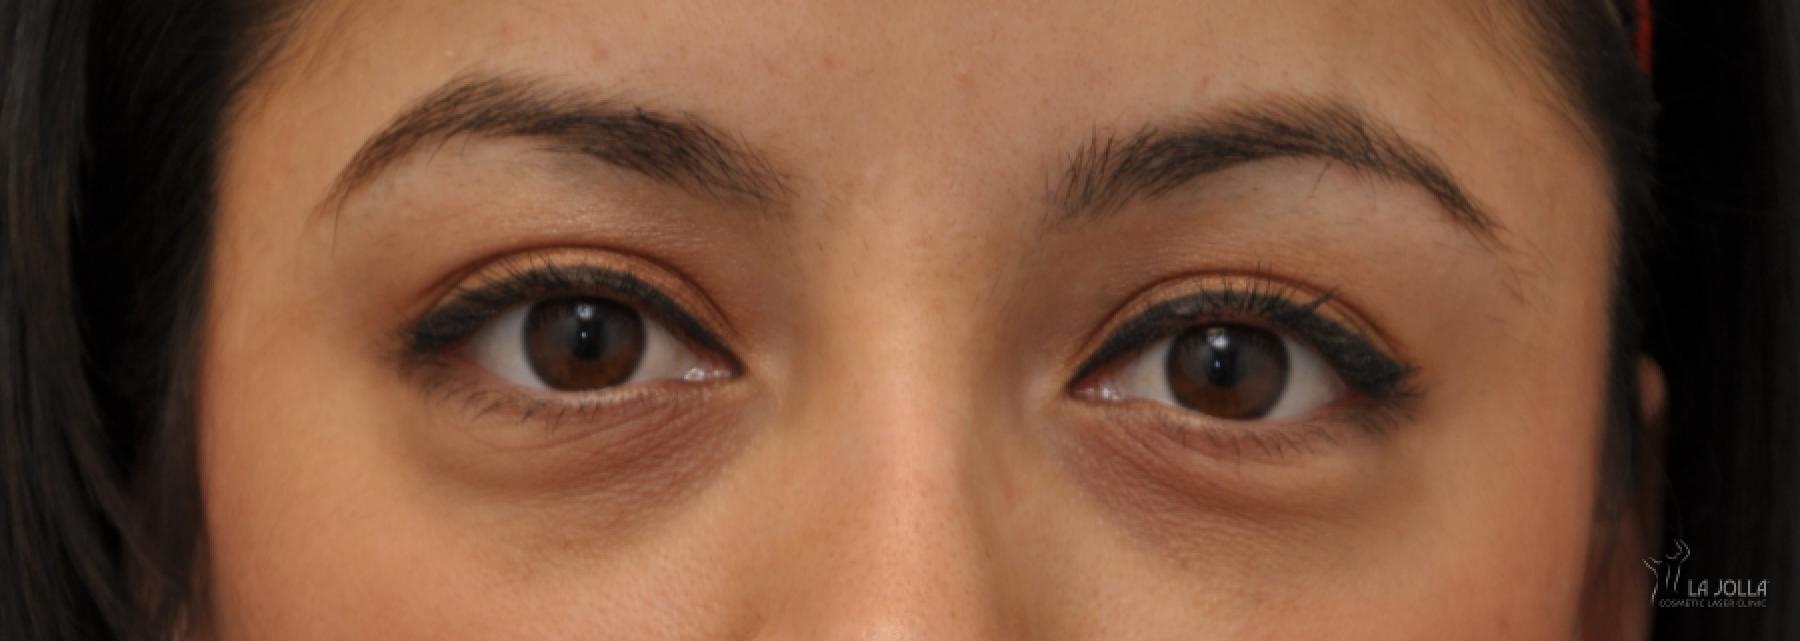 Under Eye Filler: Patient 4 - Before 1